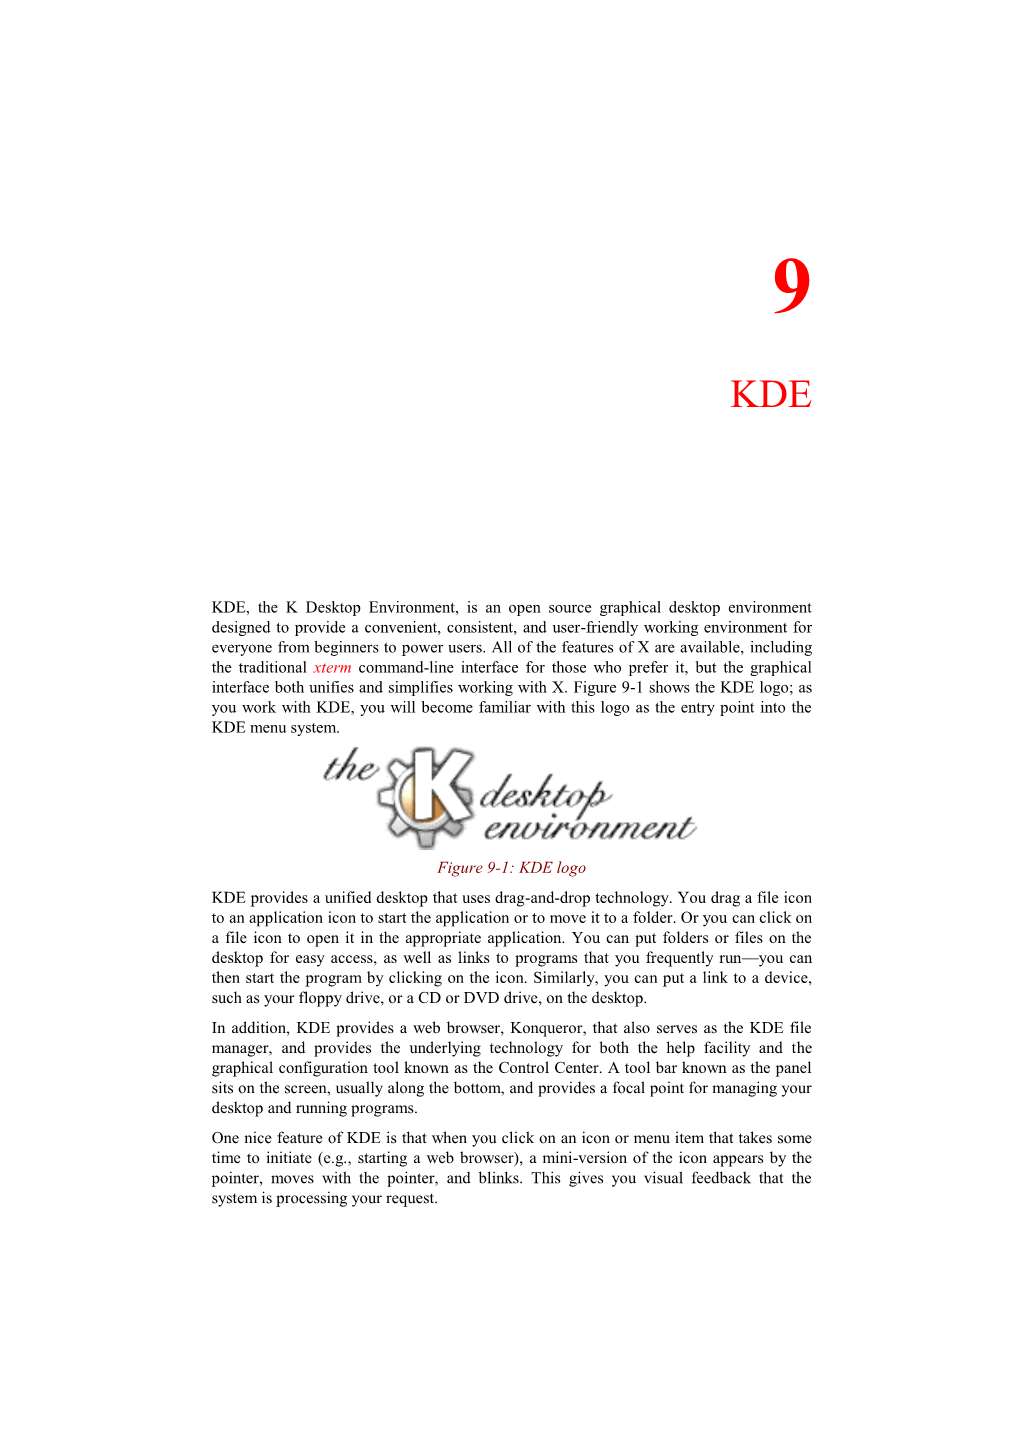 KDE, the K Desktop Environment, Is an Open Source Graphical Desktop